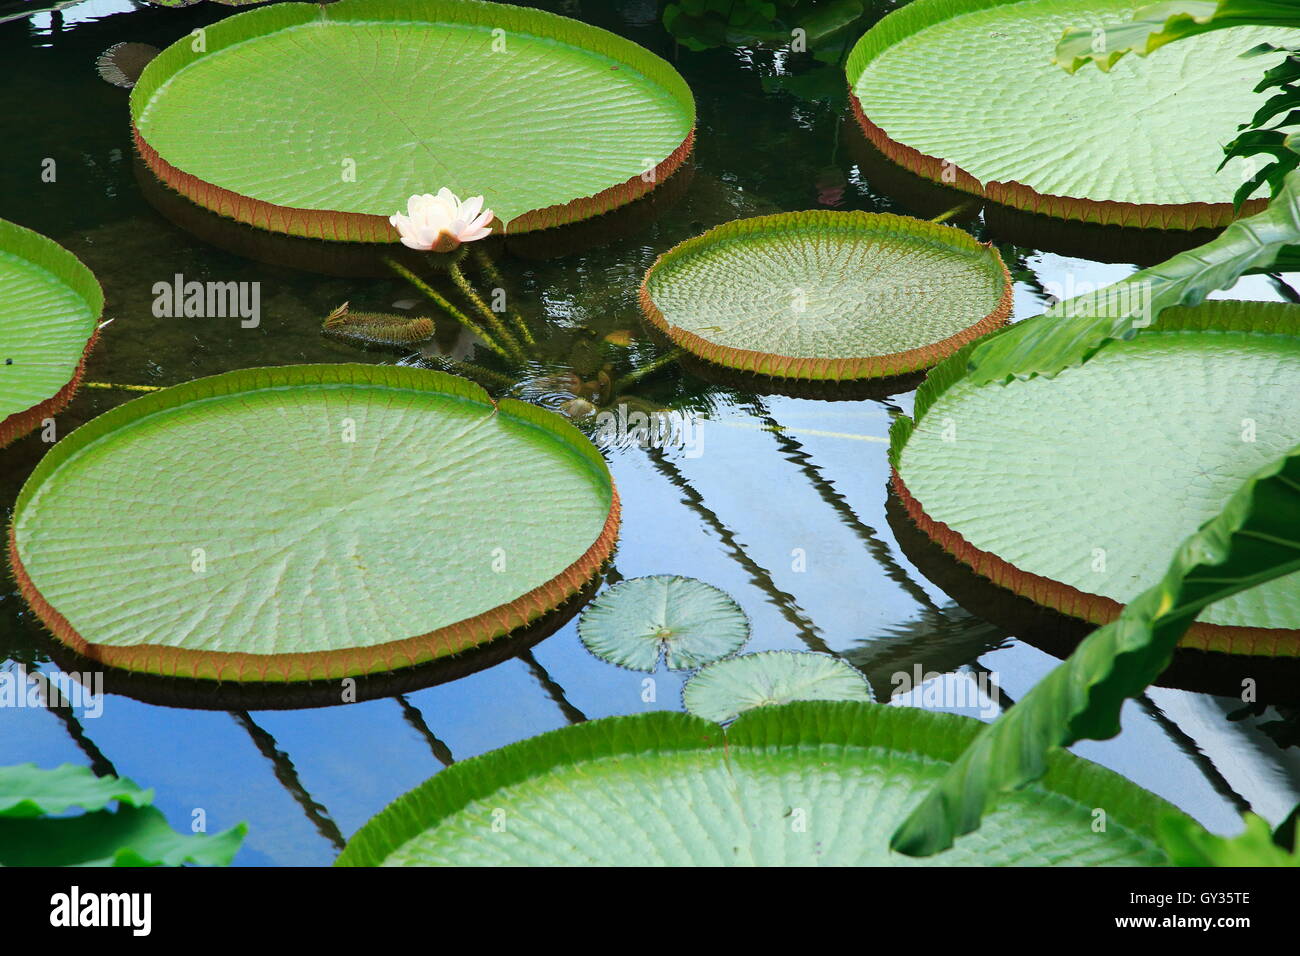 Water Lily plantes, environnement de forêt tropicale, Princess of Wales conservatory, Royal Botanic Gardens, Kew London England UK Banque D'Images